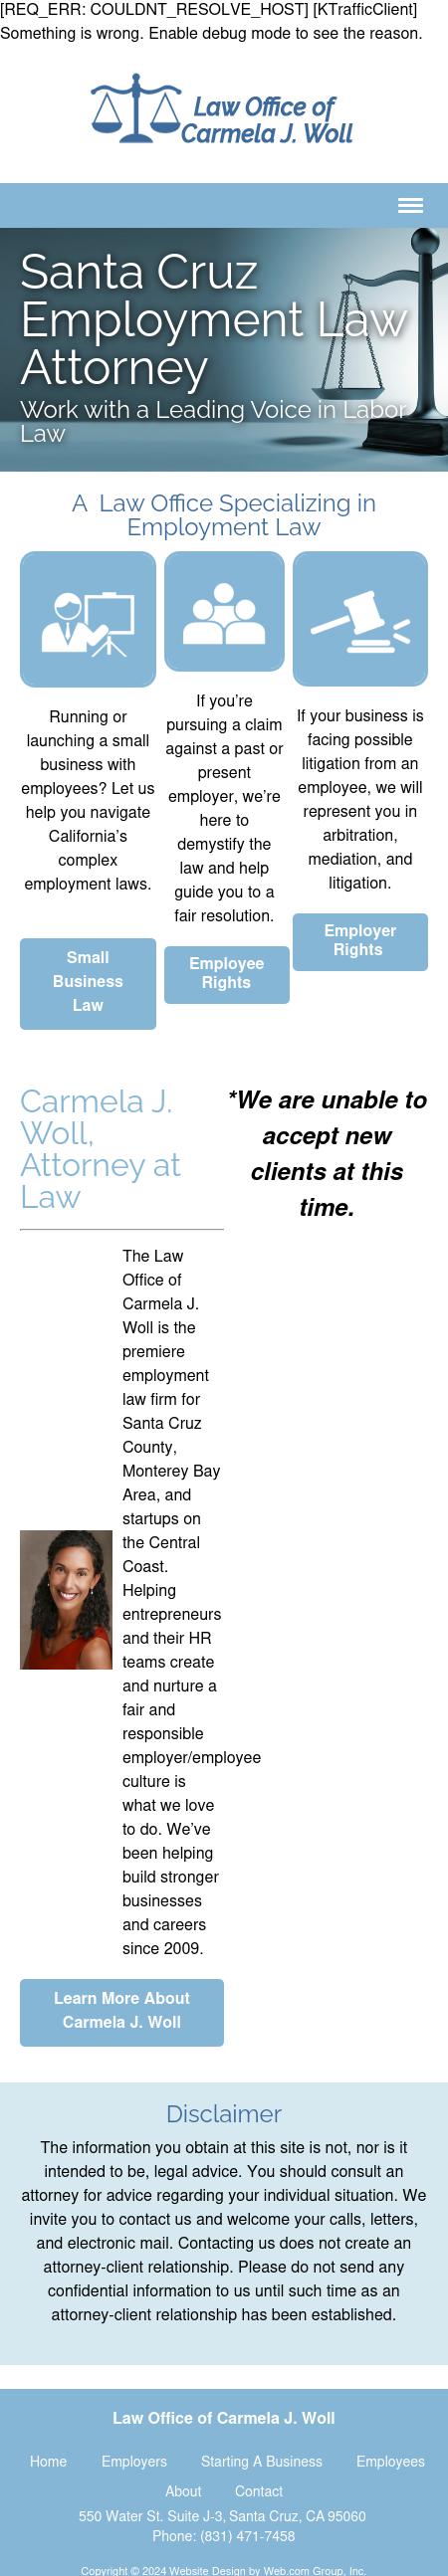 Law Office of Carmela J. Woll - Santa Cruz CA Lawyers